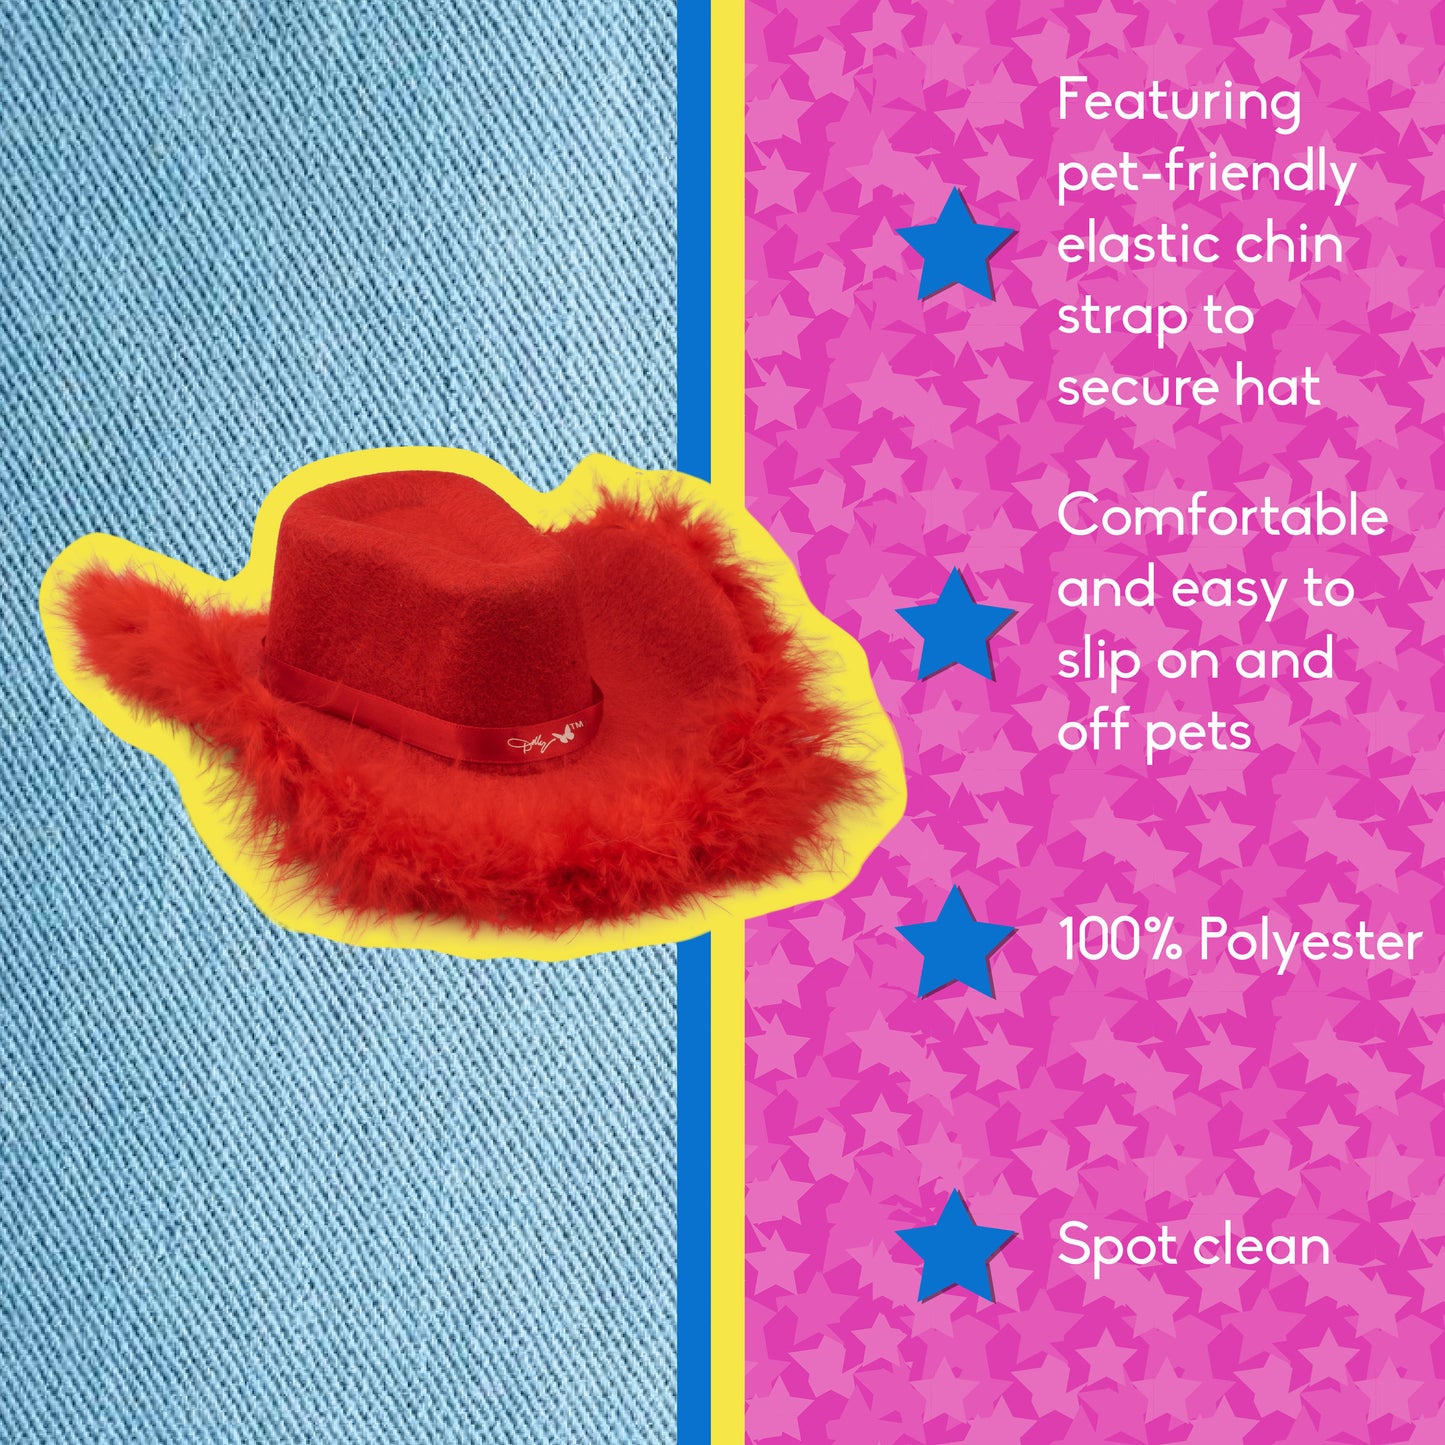 Red Fur-Trimmed Cowboy Hat for Pets